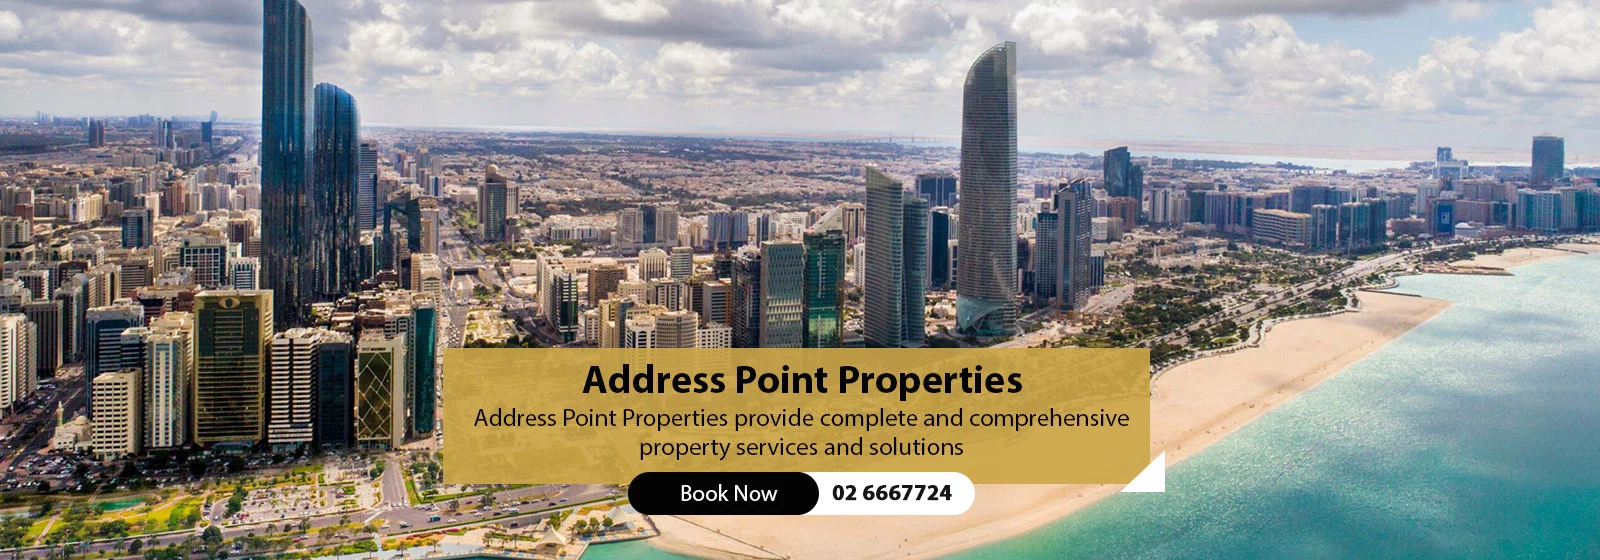 Address Point Properties